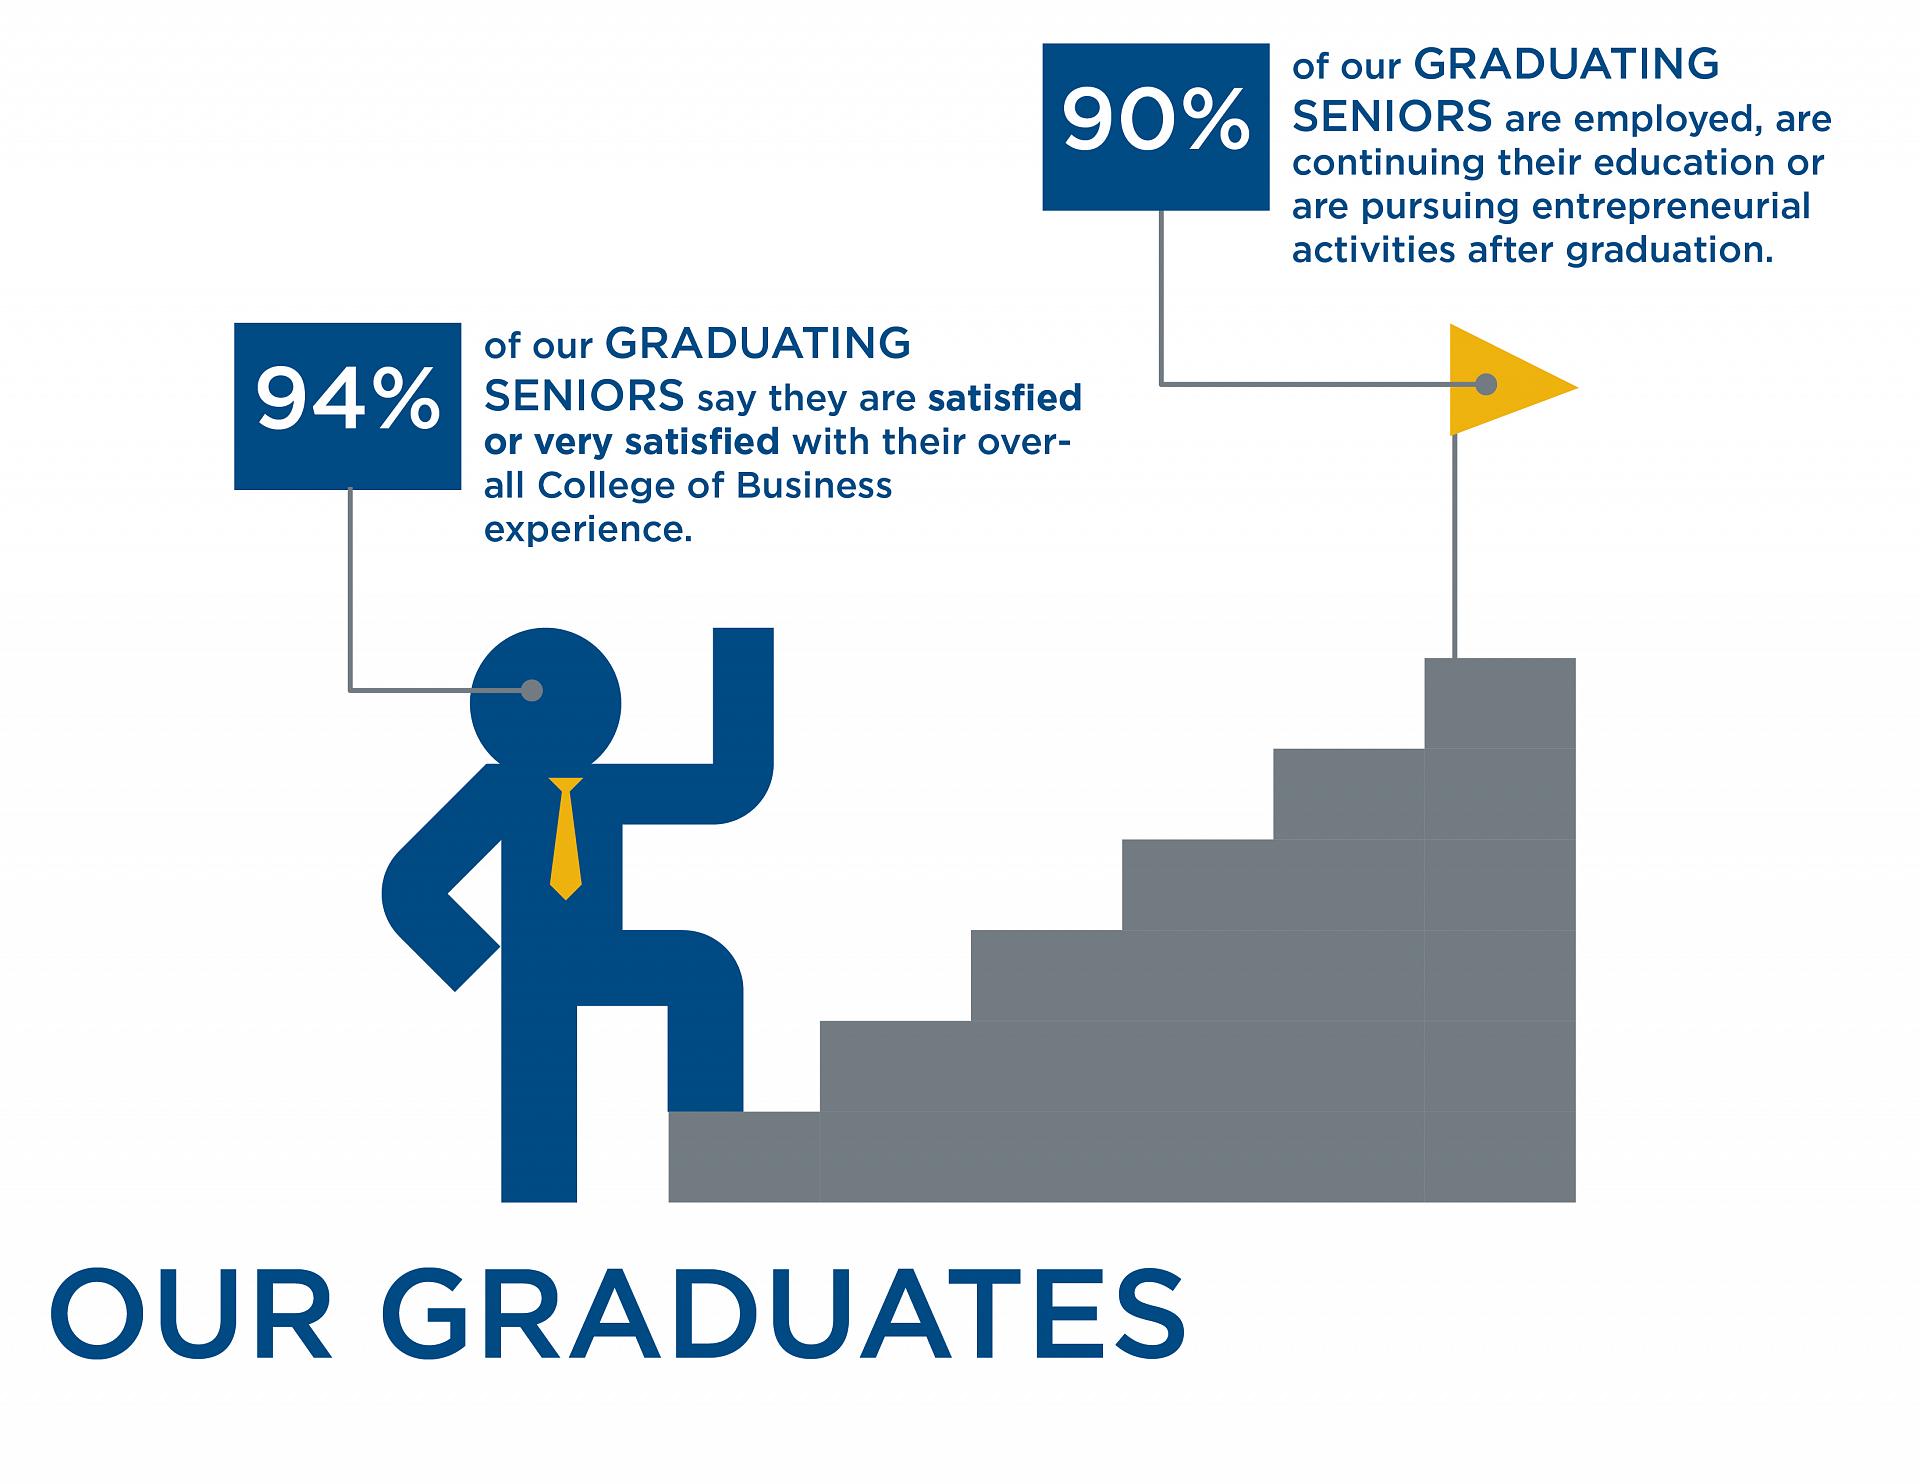 Our graduates infographic